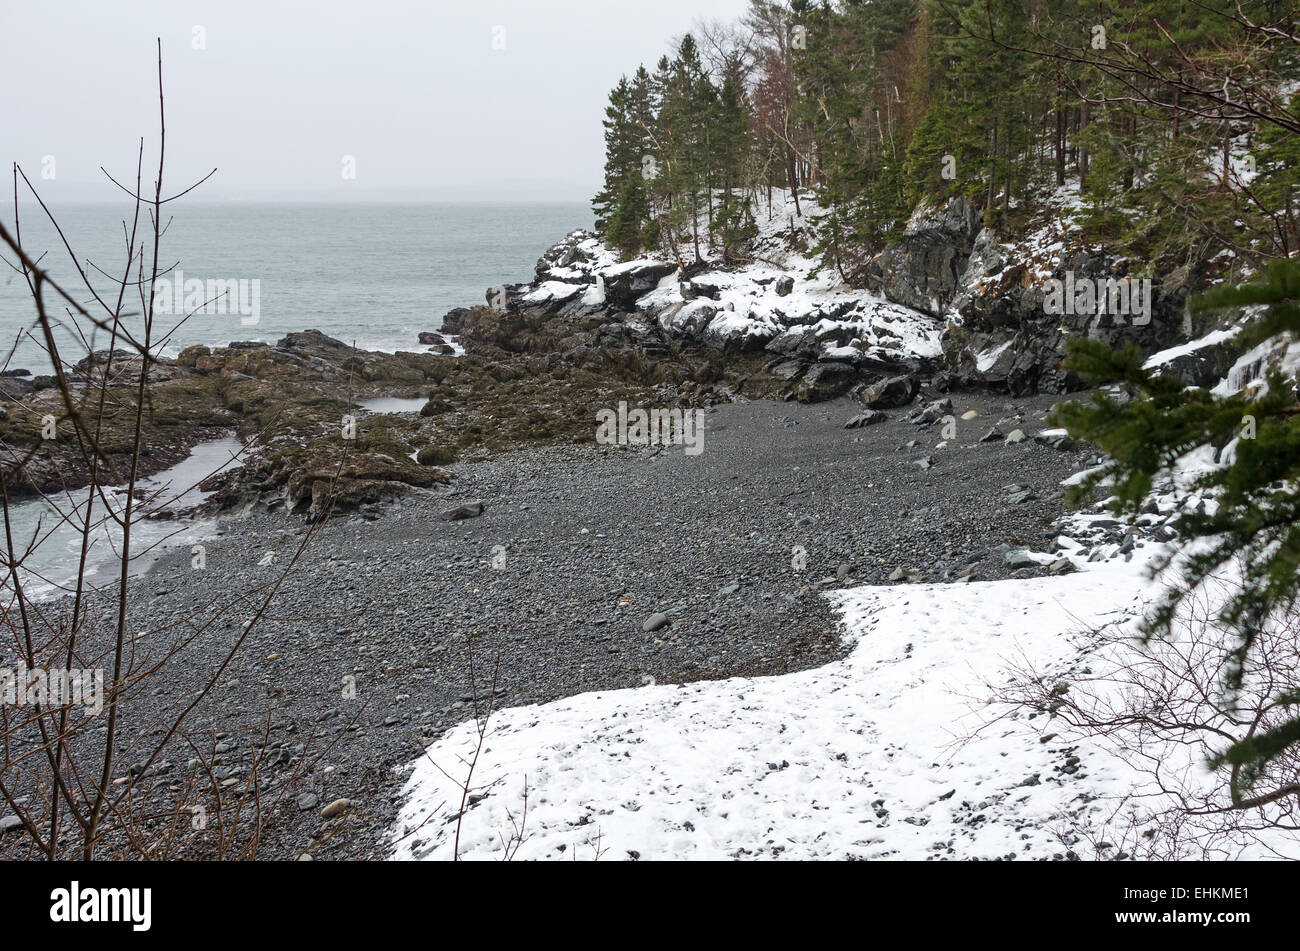 Snow, ice, and rain on the beach at Compass Harbor, Acadia National Park, Maine. Stock Photo